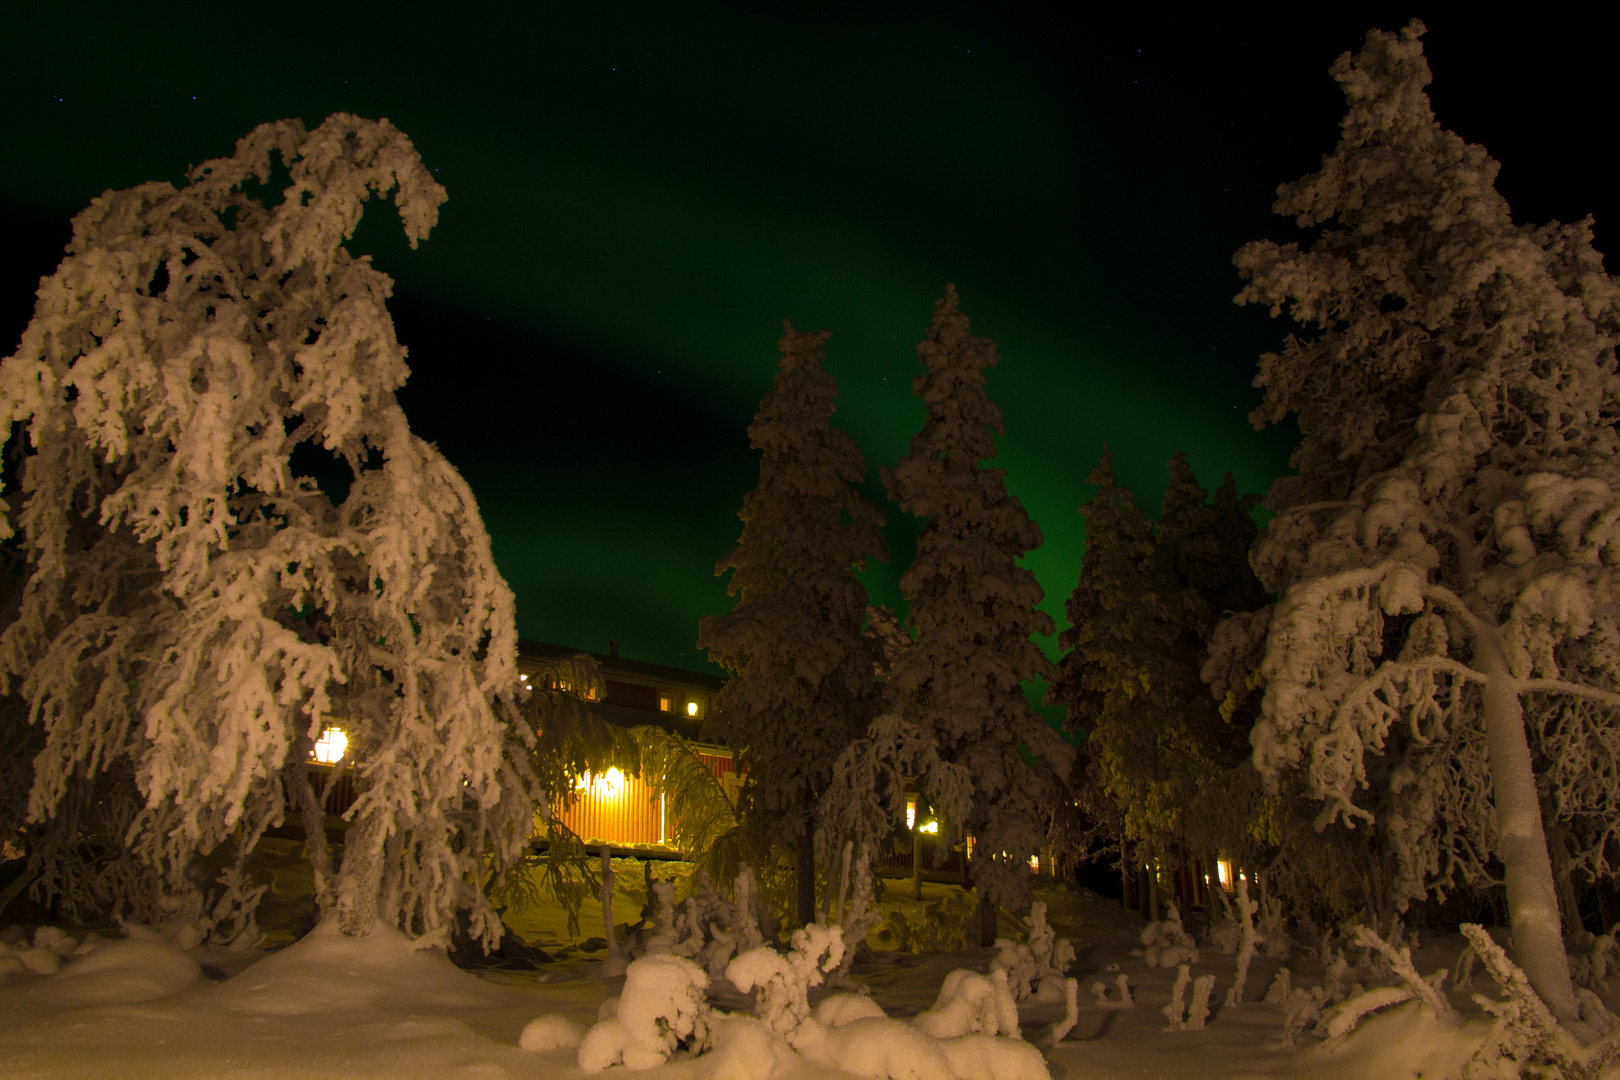 Nothern lights - Saariselkä (Finland)